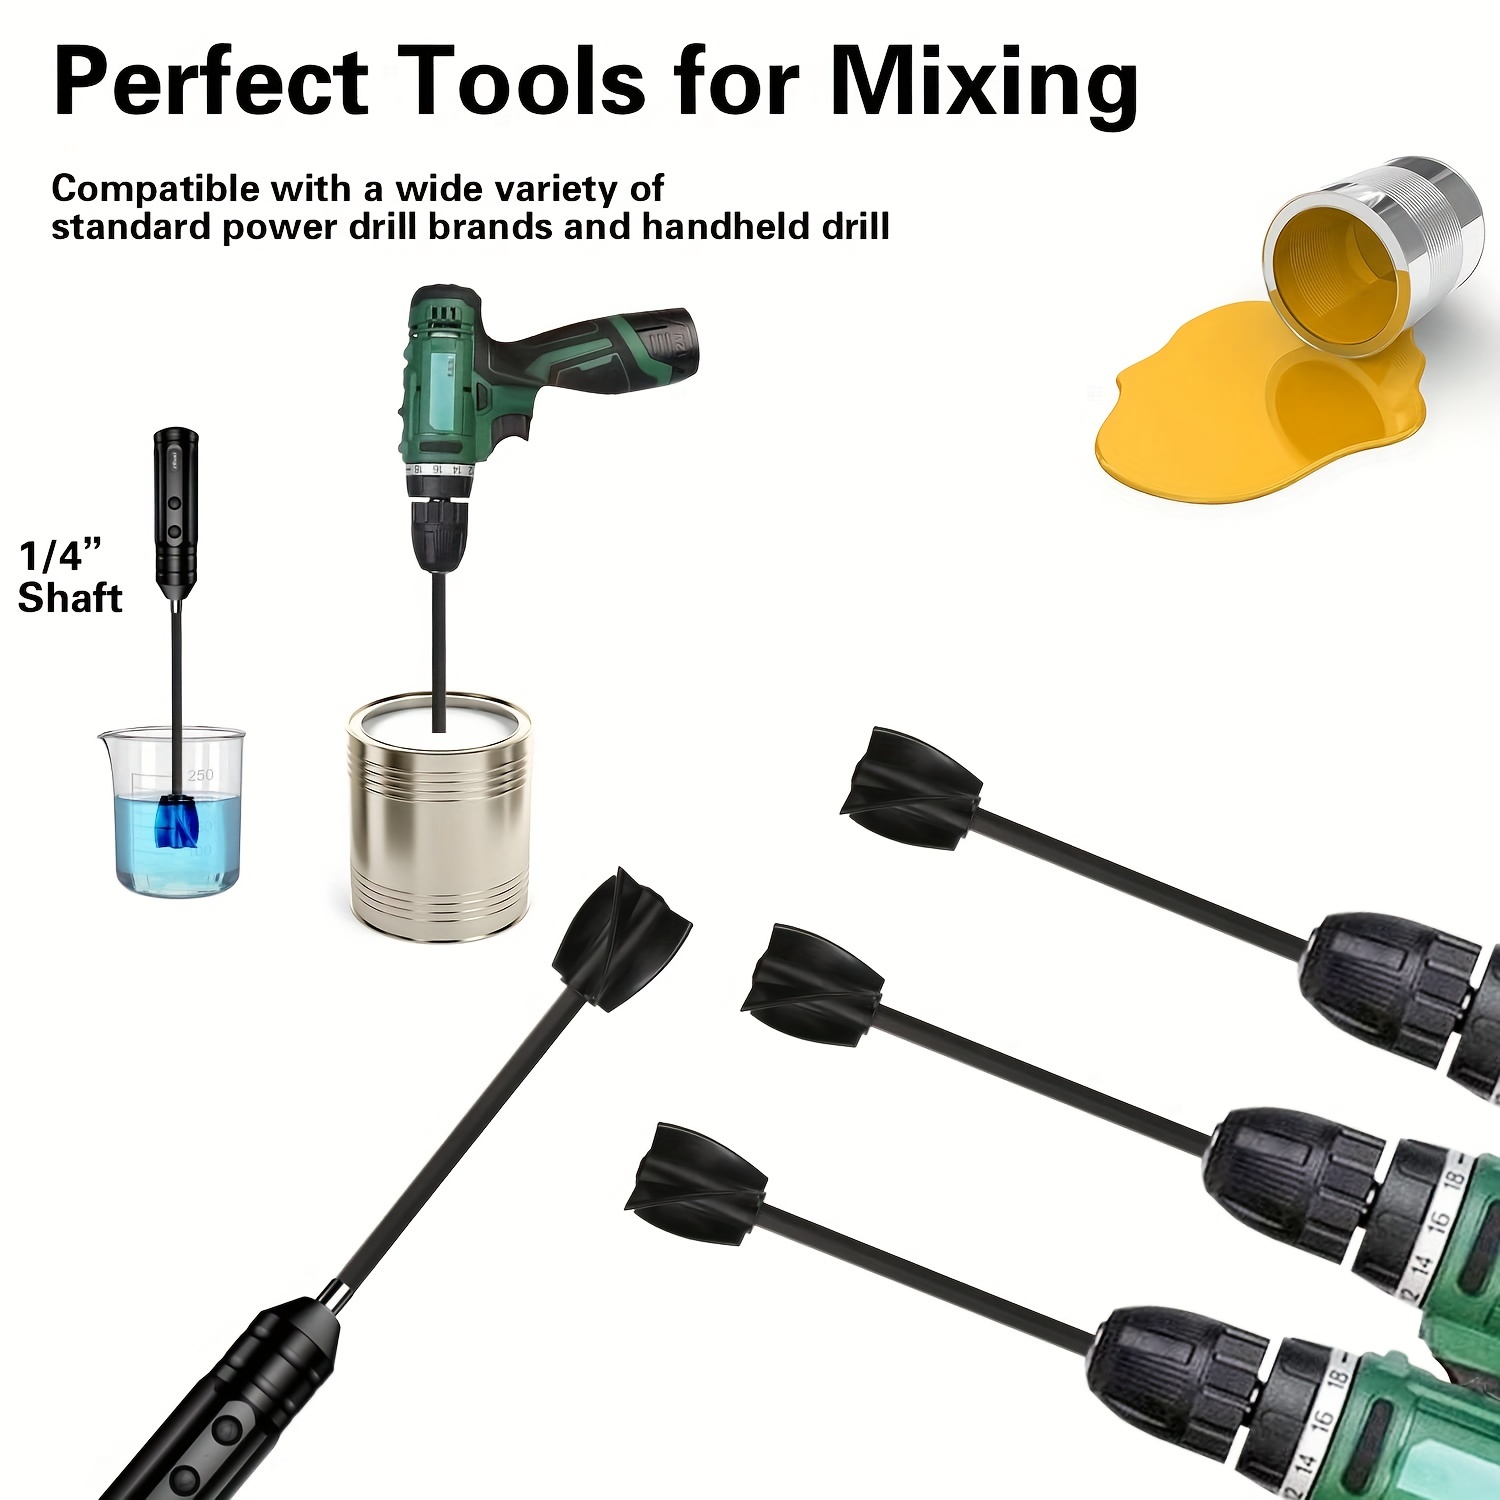 Paint Mixer Bit Paint Mixer Drill Mixer Paint Stirrer for Drill